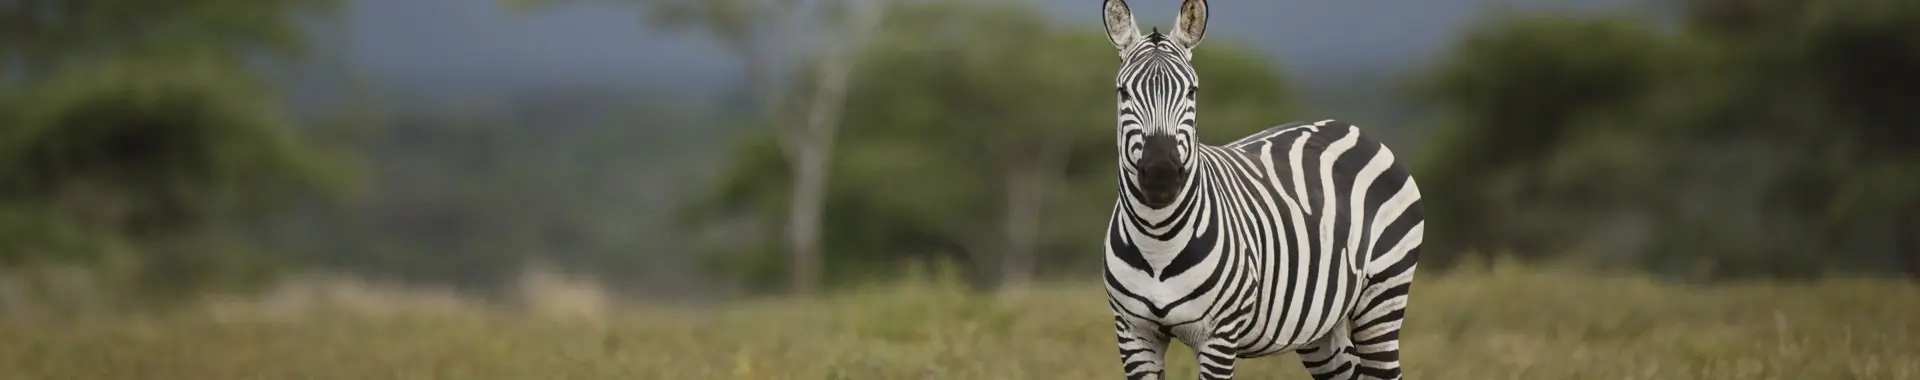 Сафари с зебрами в Танзании